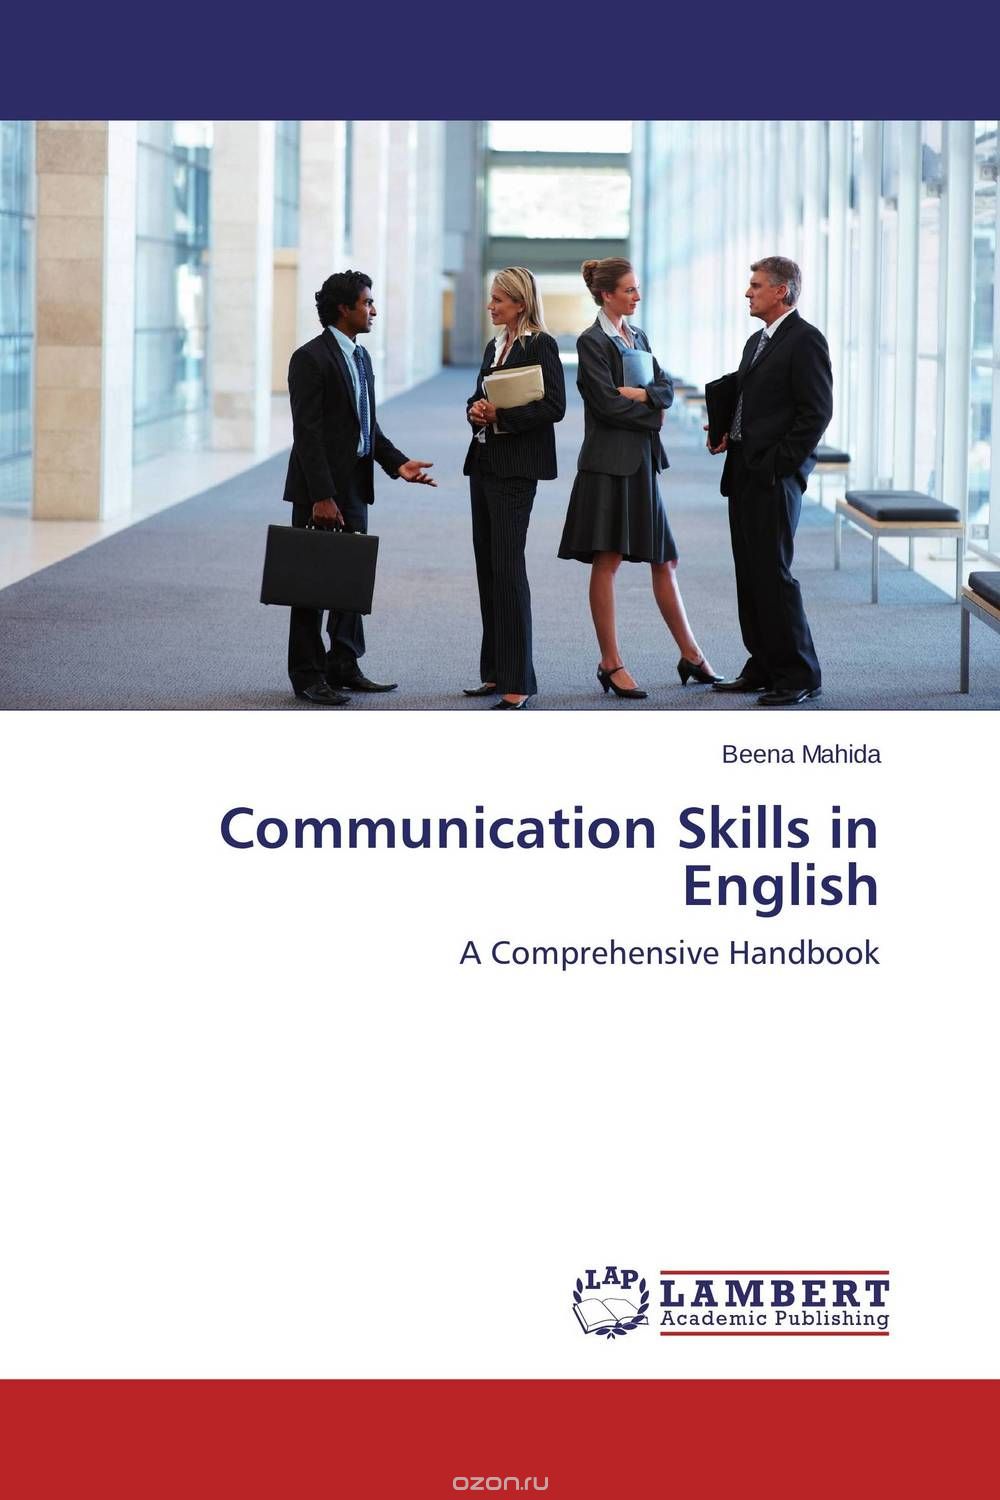 Скачать книгу "Communication Skills in English"